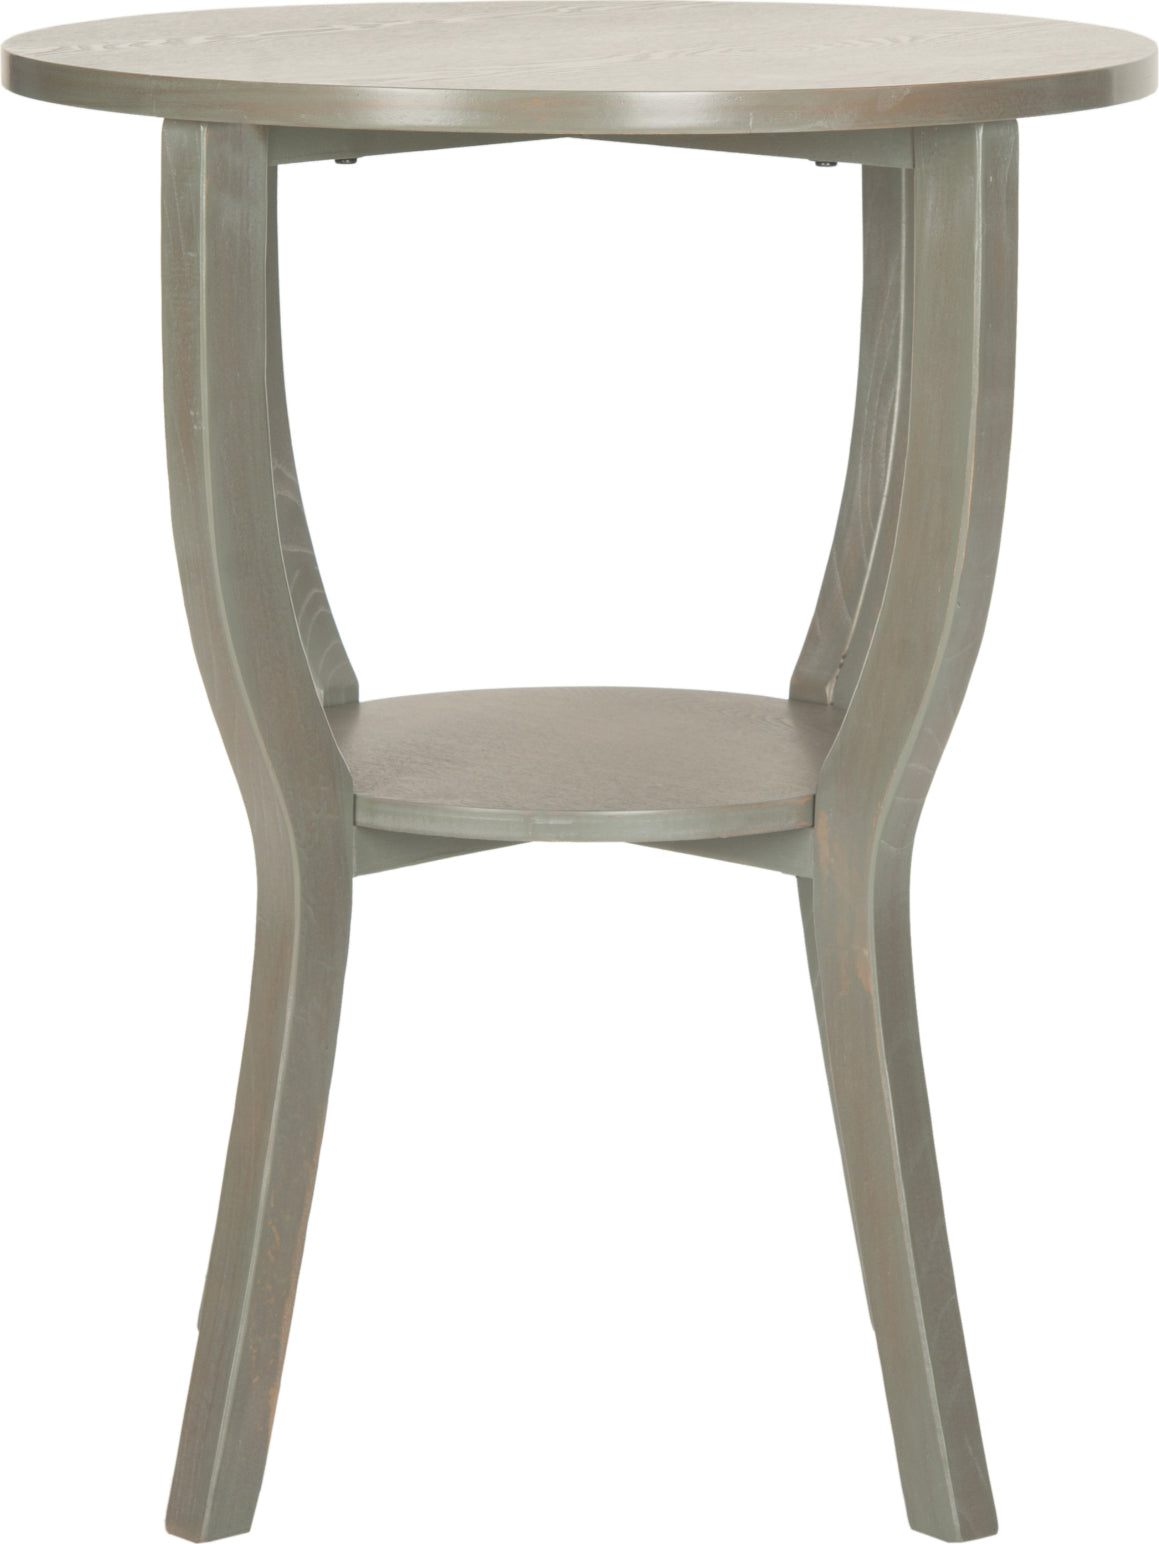 Safavieh Rhodes Round Pedestal Accent Table French Grey Furniture main image